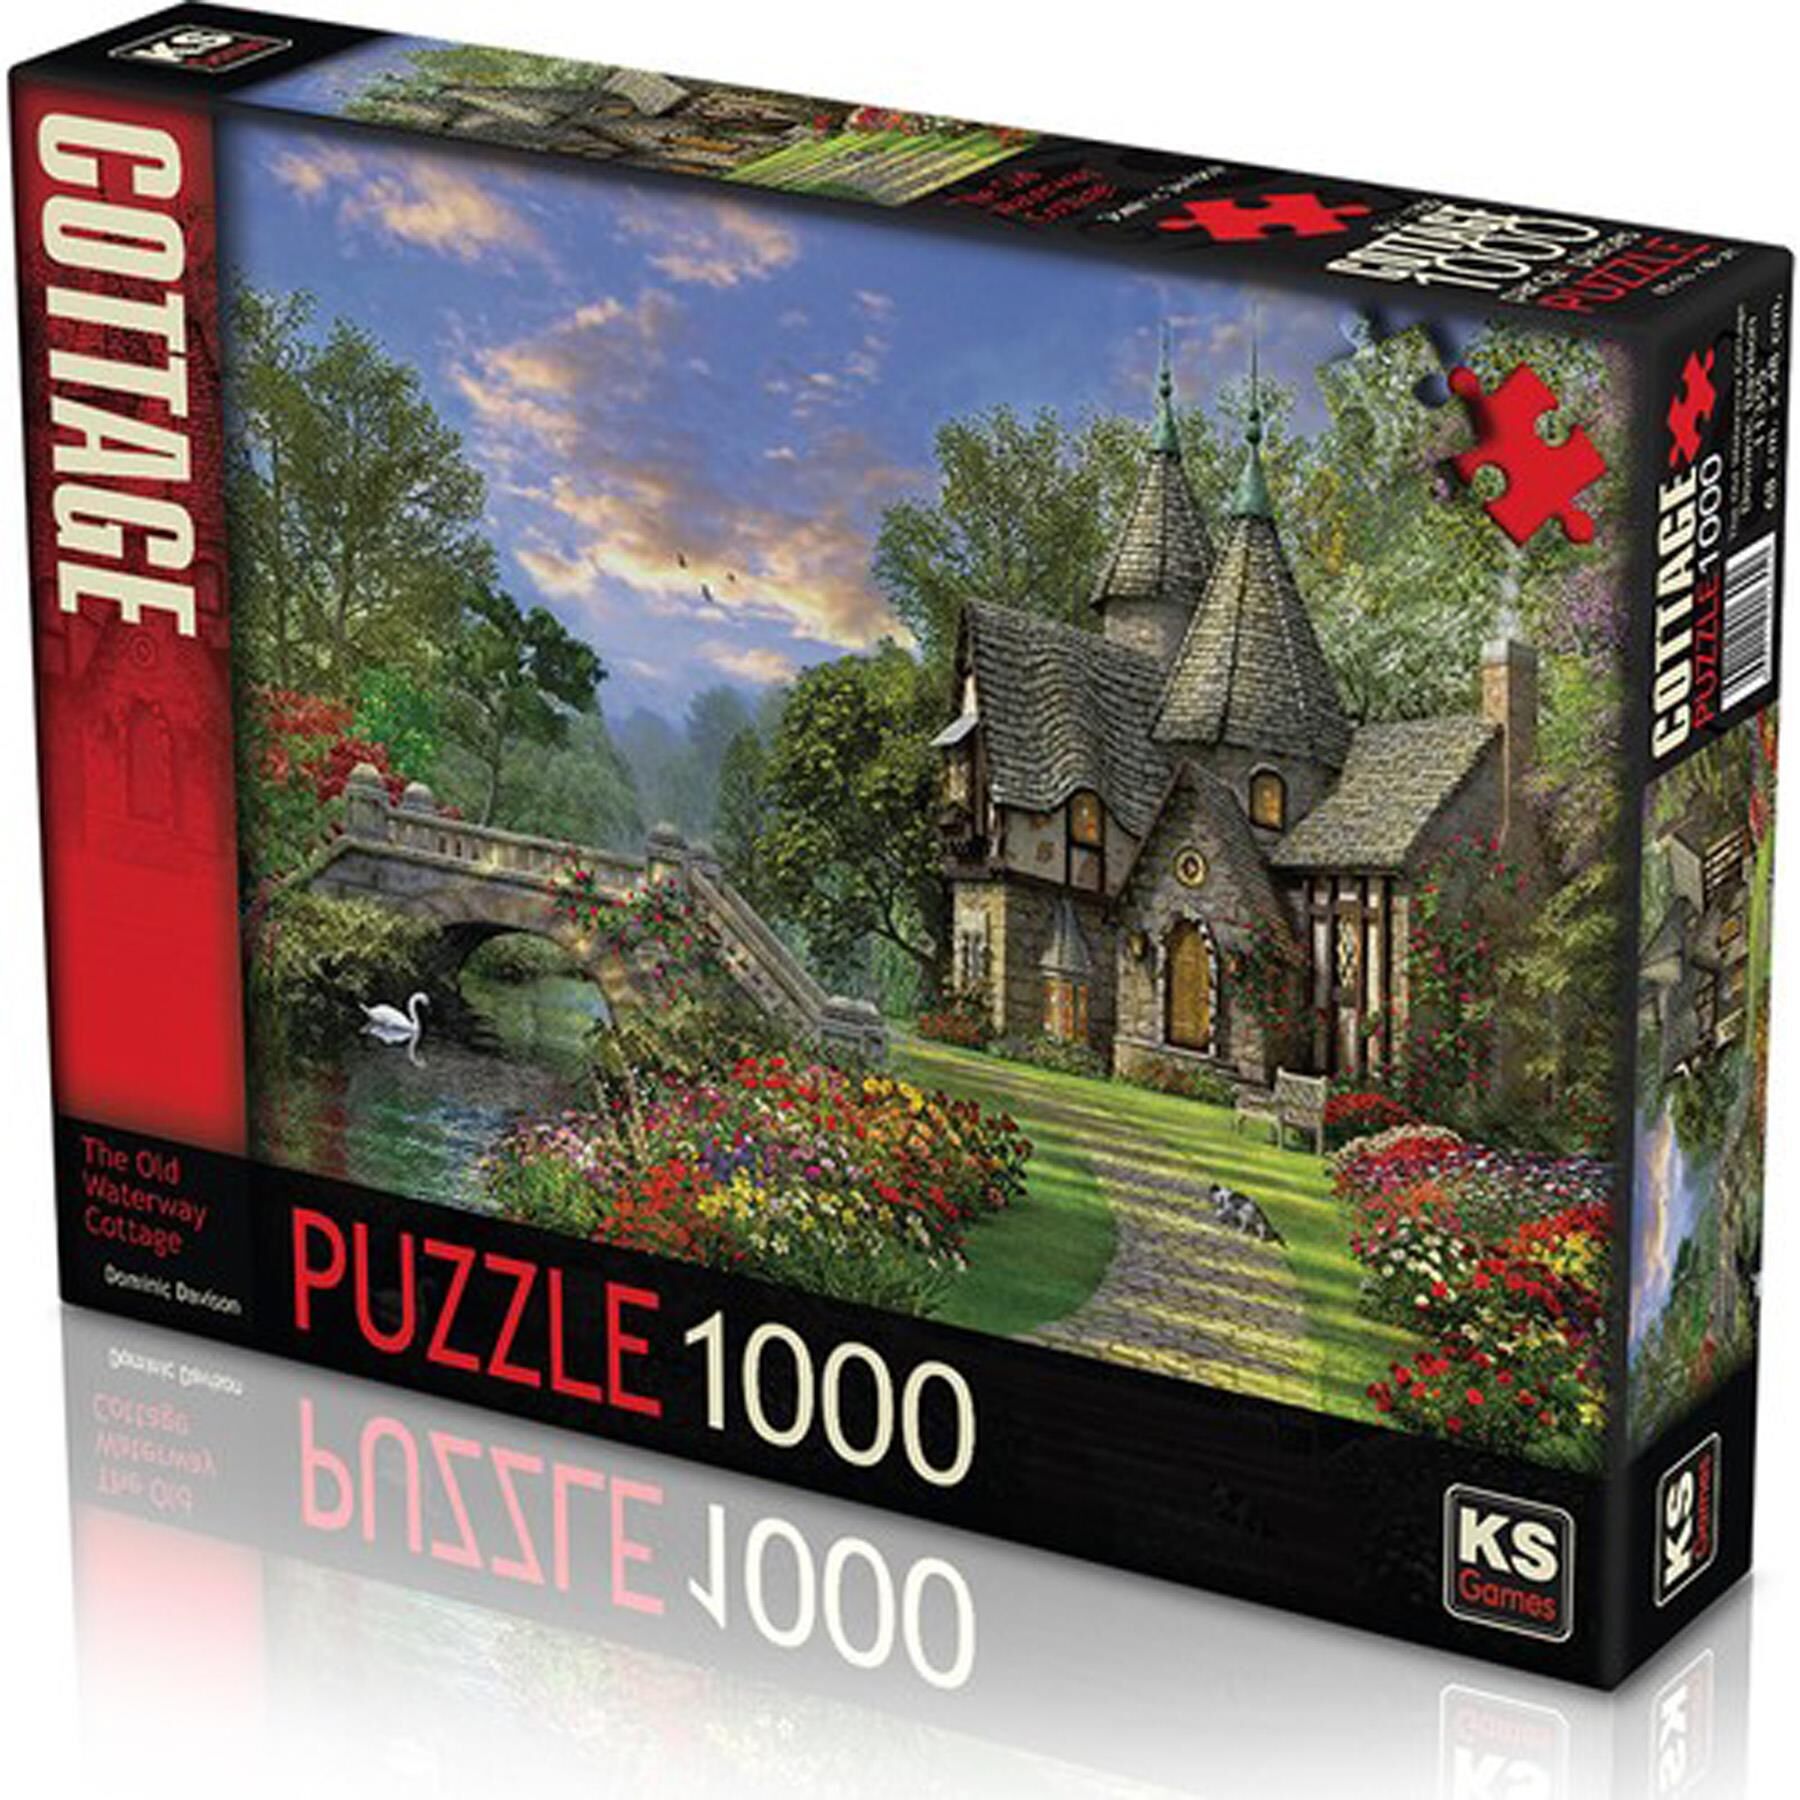 Ks Games Puzzle 1000li The Old Waterway 11355 (1 adet)